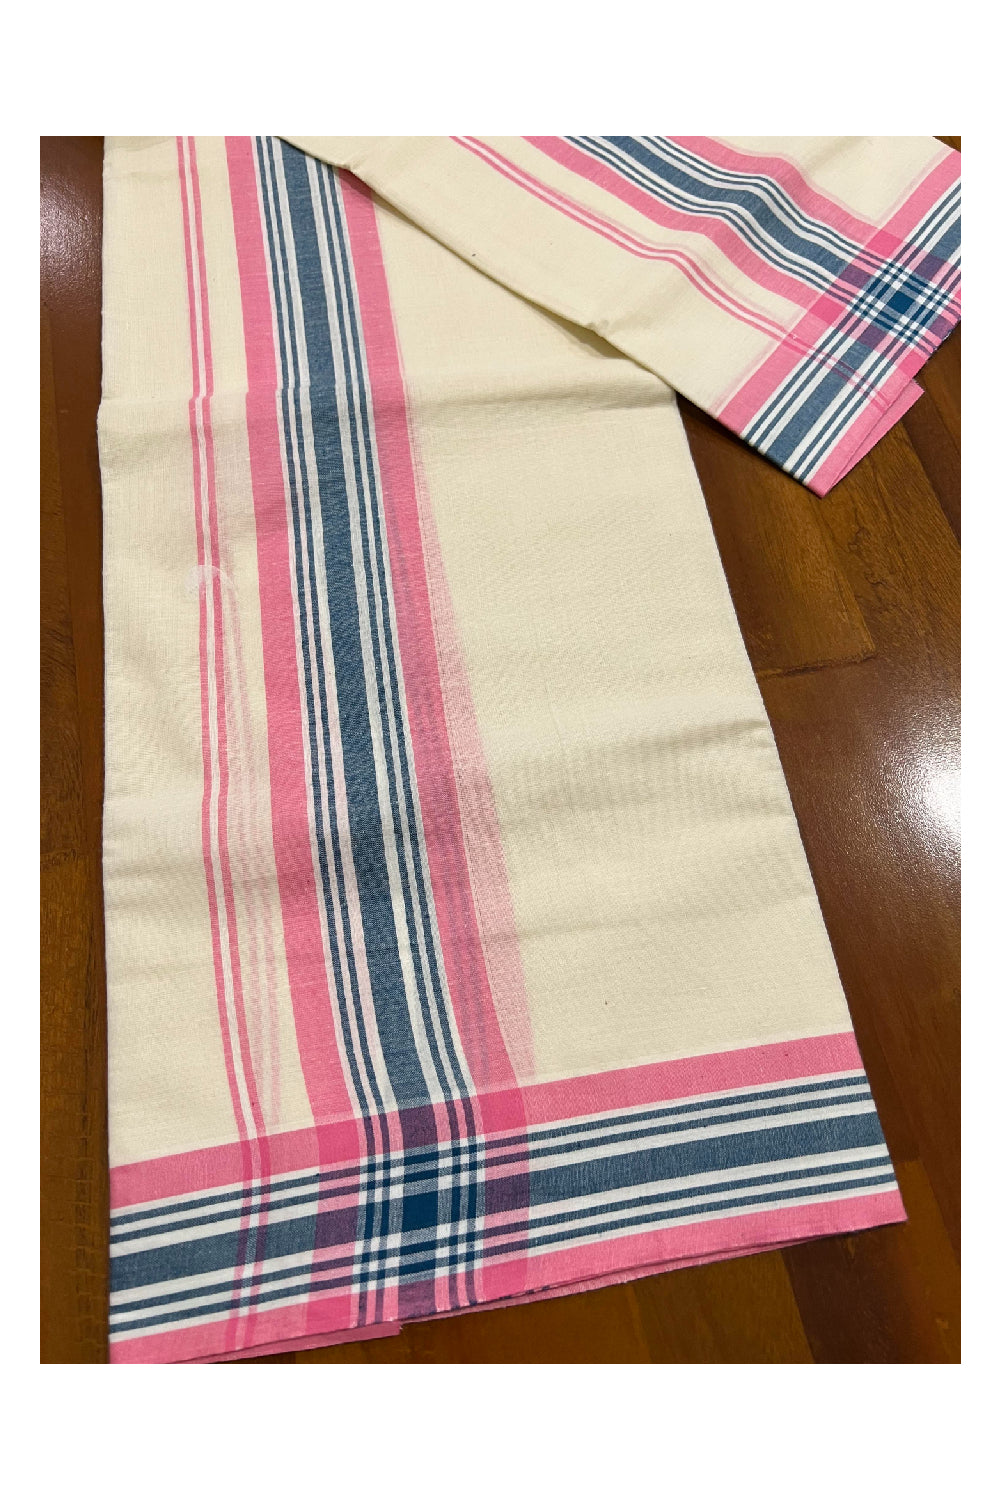 Kerala Cotton Mundum Neriyathum Single (Set Mundu) with Mulloth Design Pink and Blue Border (Extra Soft Cotton)